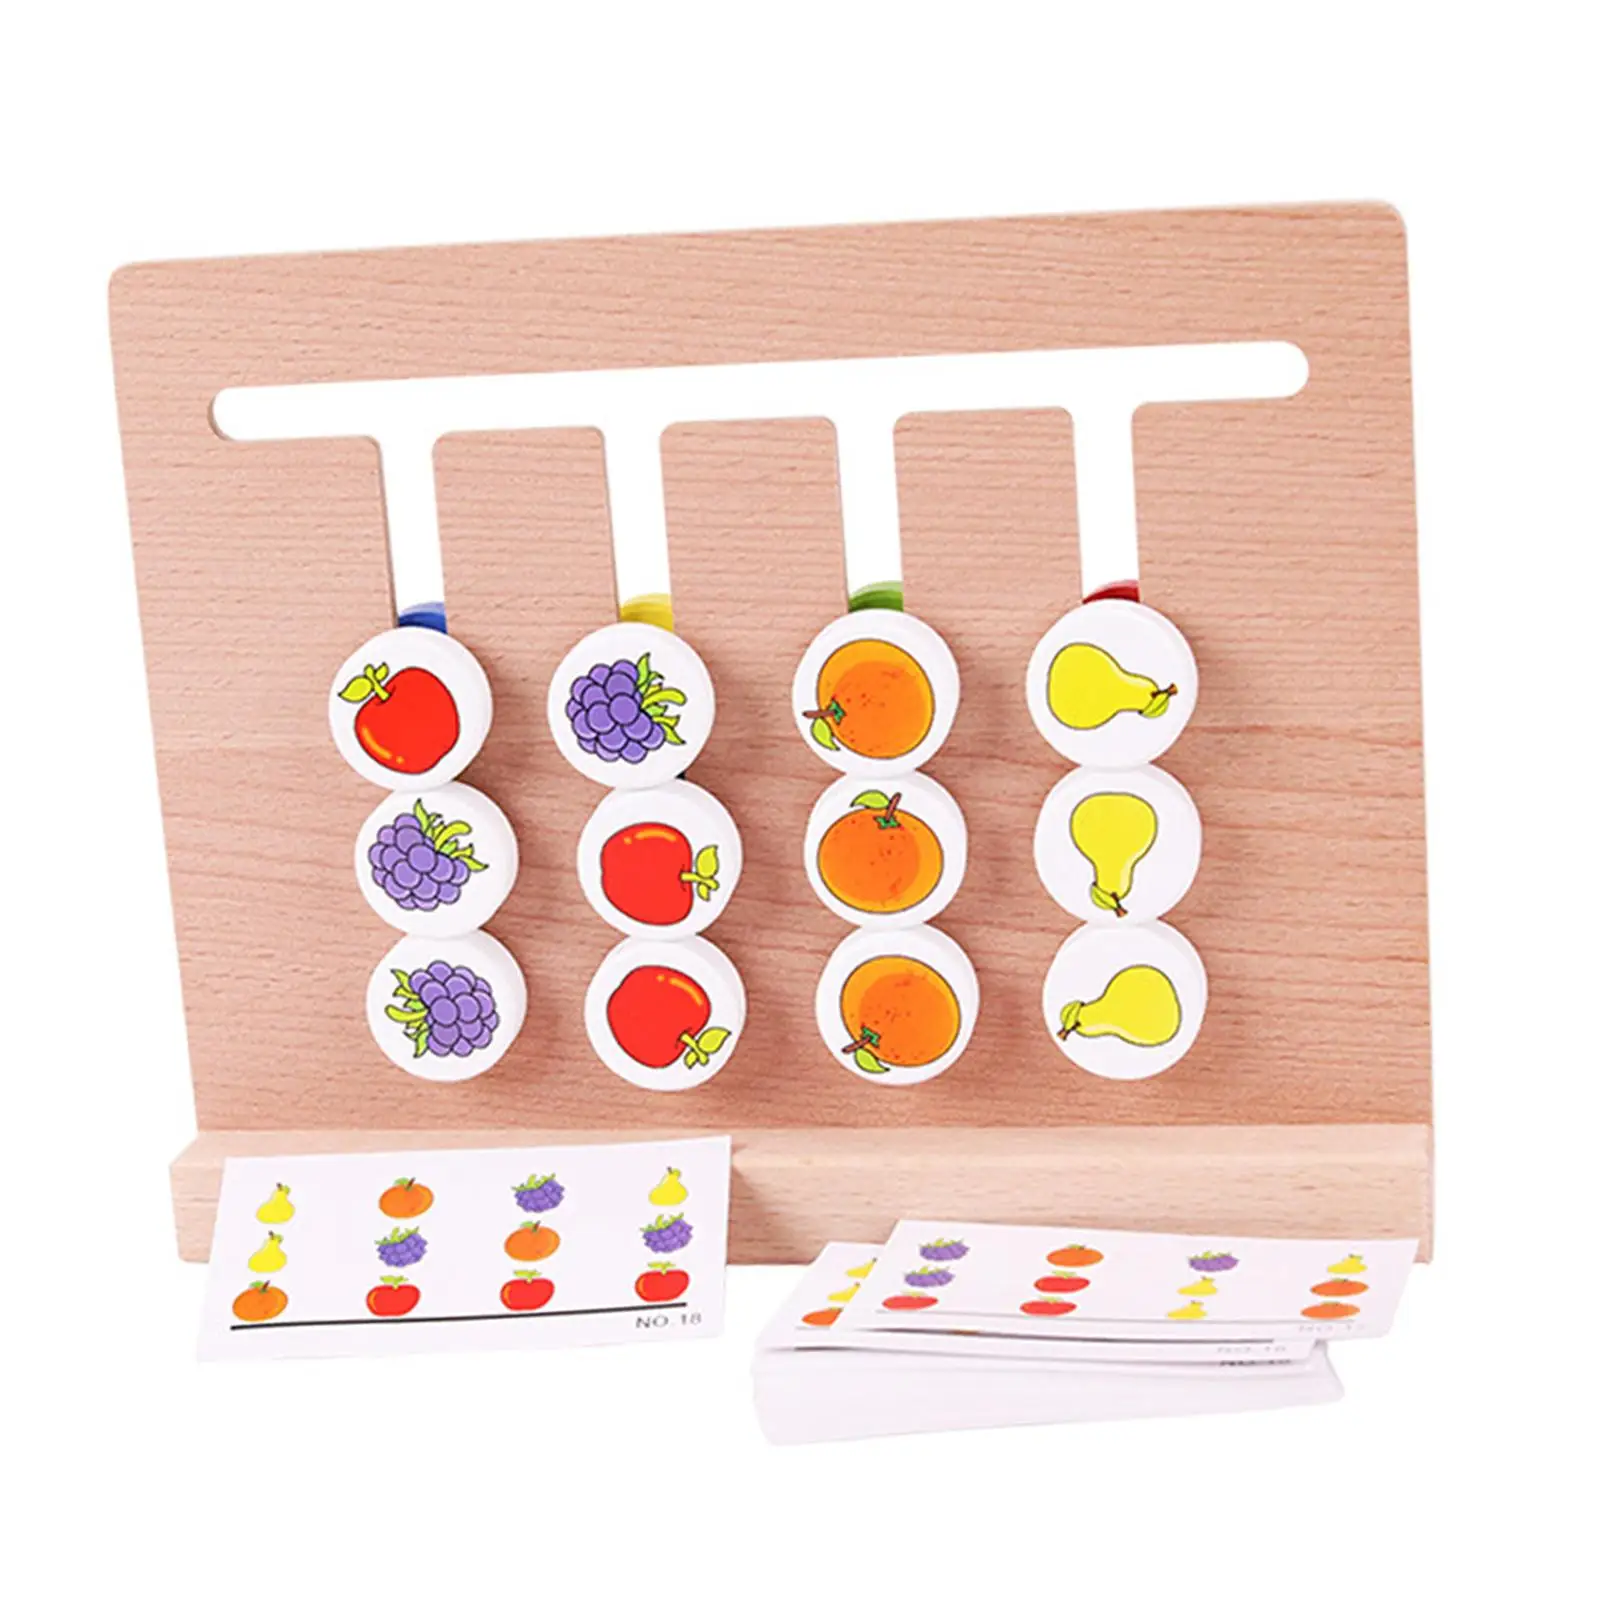 Color Sort Board Developmental Toy Teaching Aids for Kindergarten Party